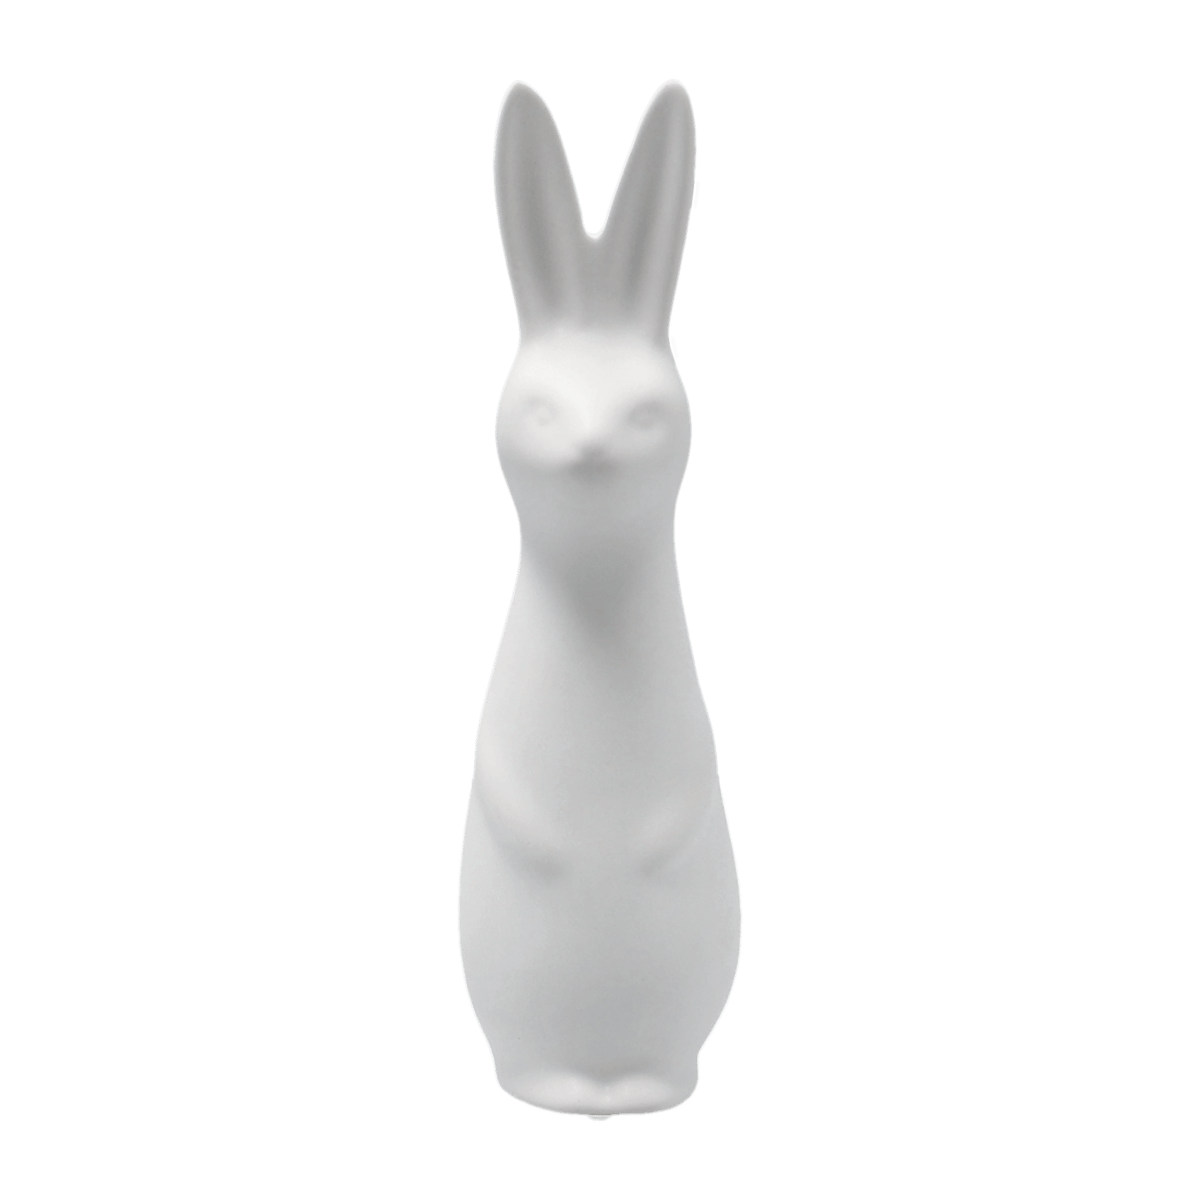 DBKD Swedish rabbit small White